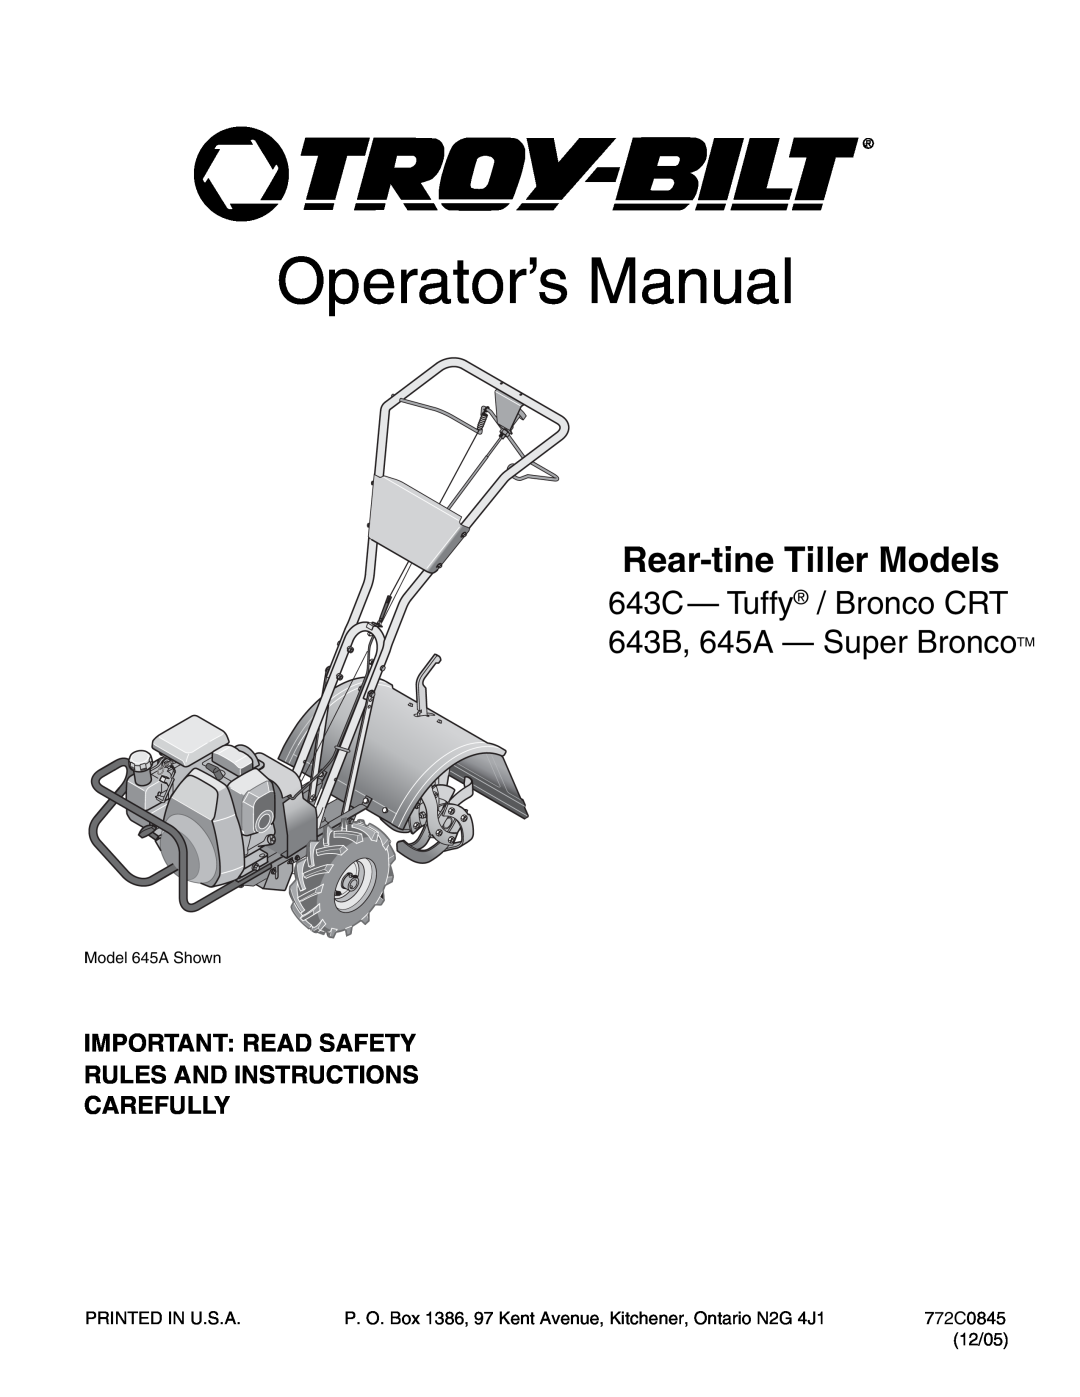 Troy-Bilt 643C Tuffy/Bronco manual Operator’s Manual, Rear-tineTiller Models, 643C - Tuffy / Bronco CRT, Carefully 